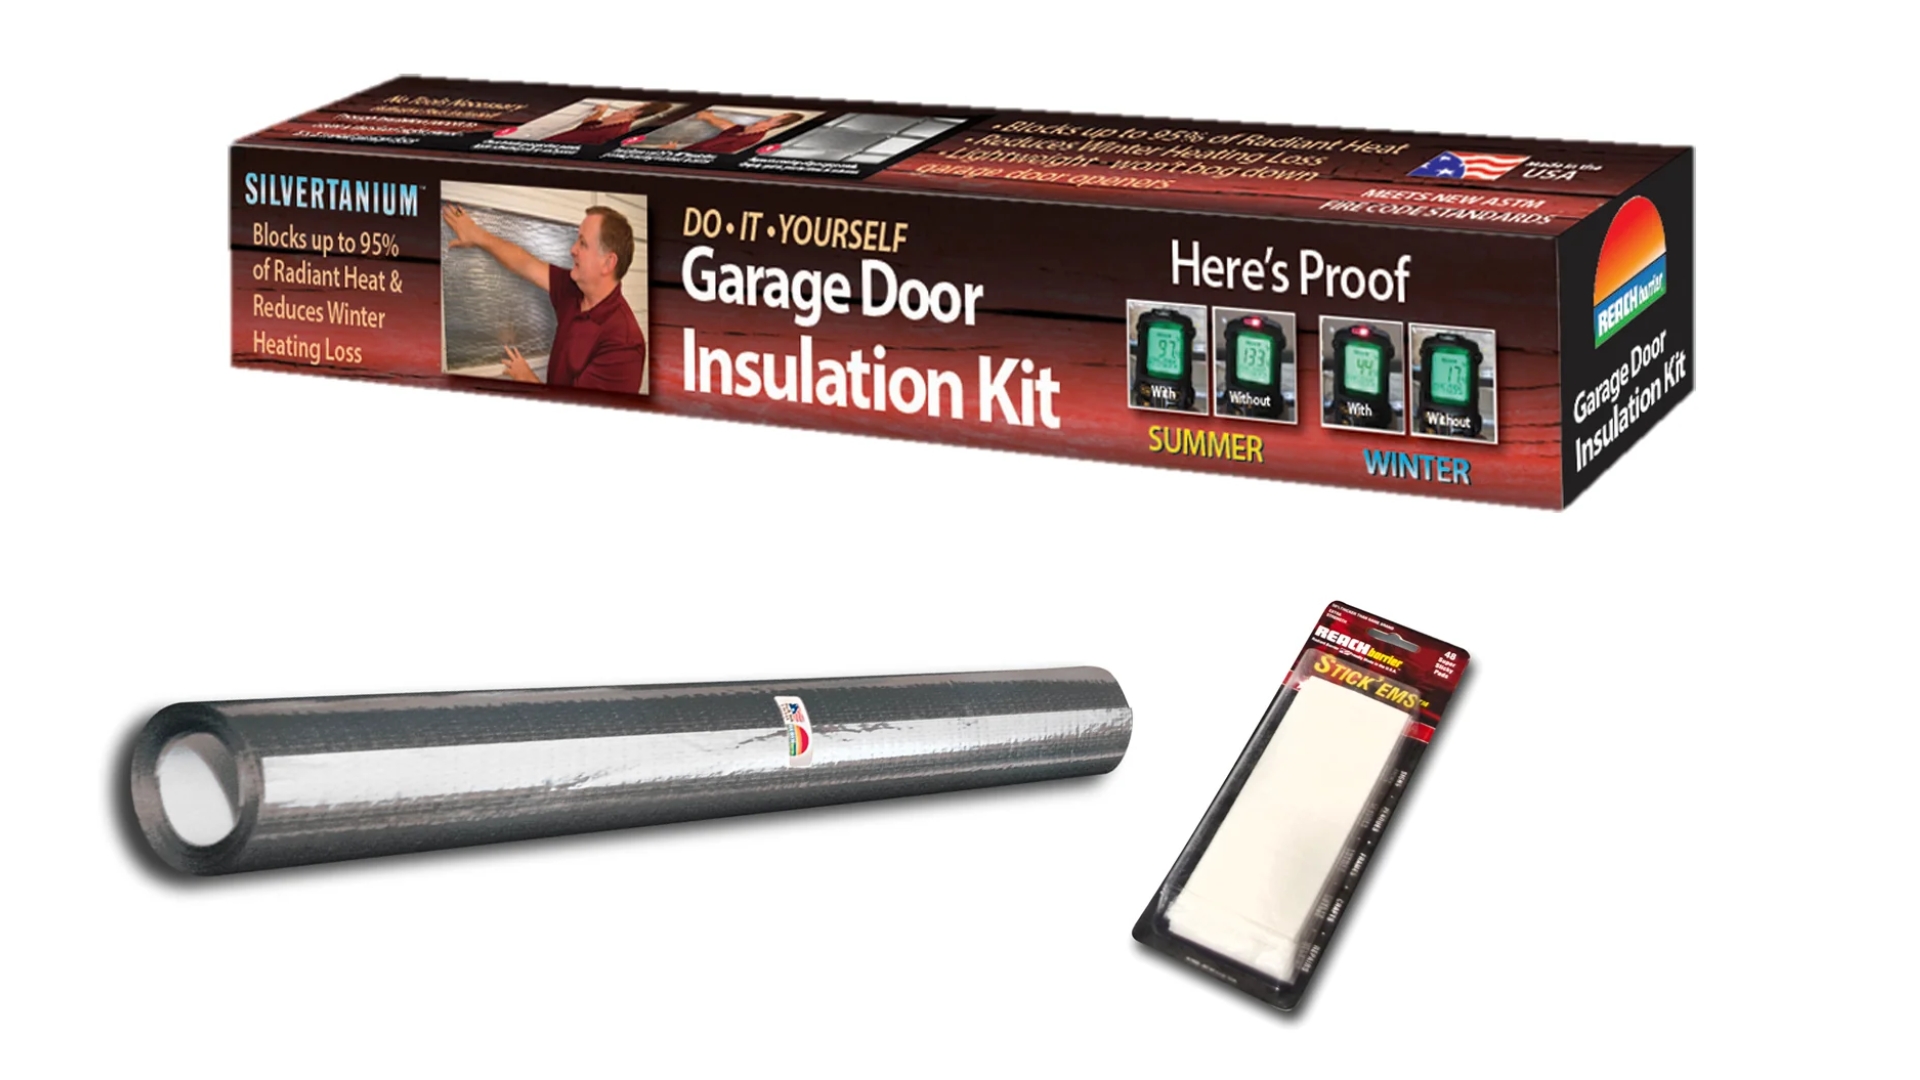 A garage door insulation kit for DIYers